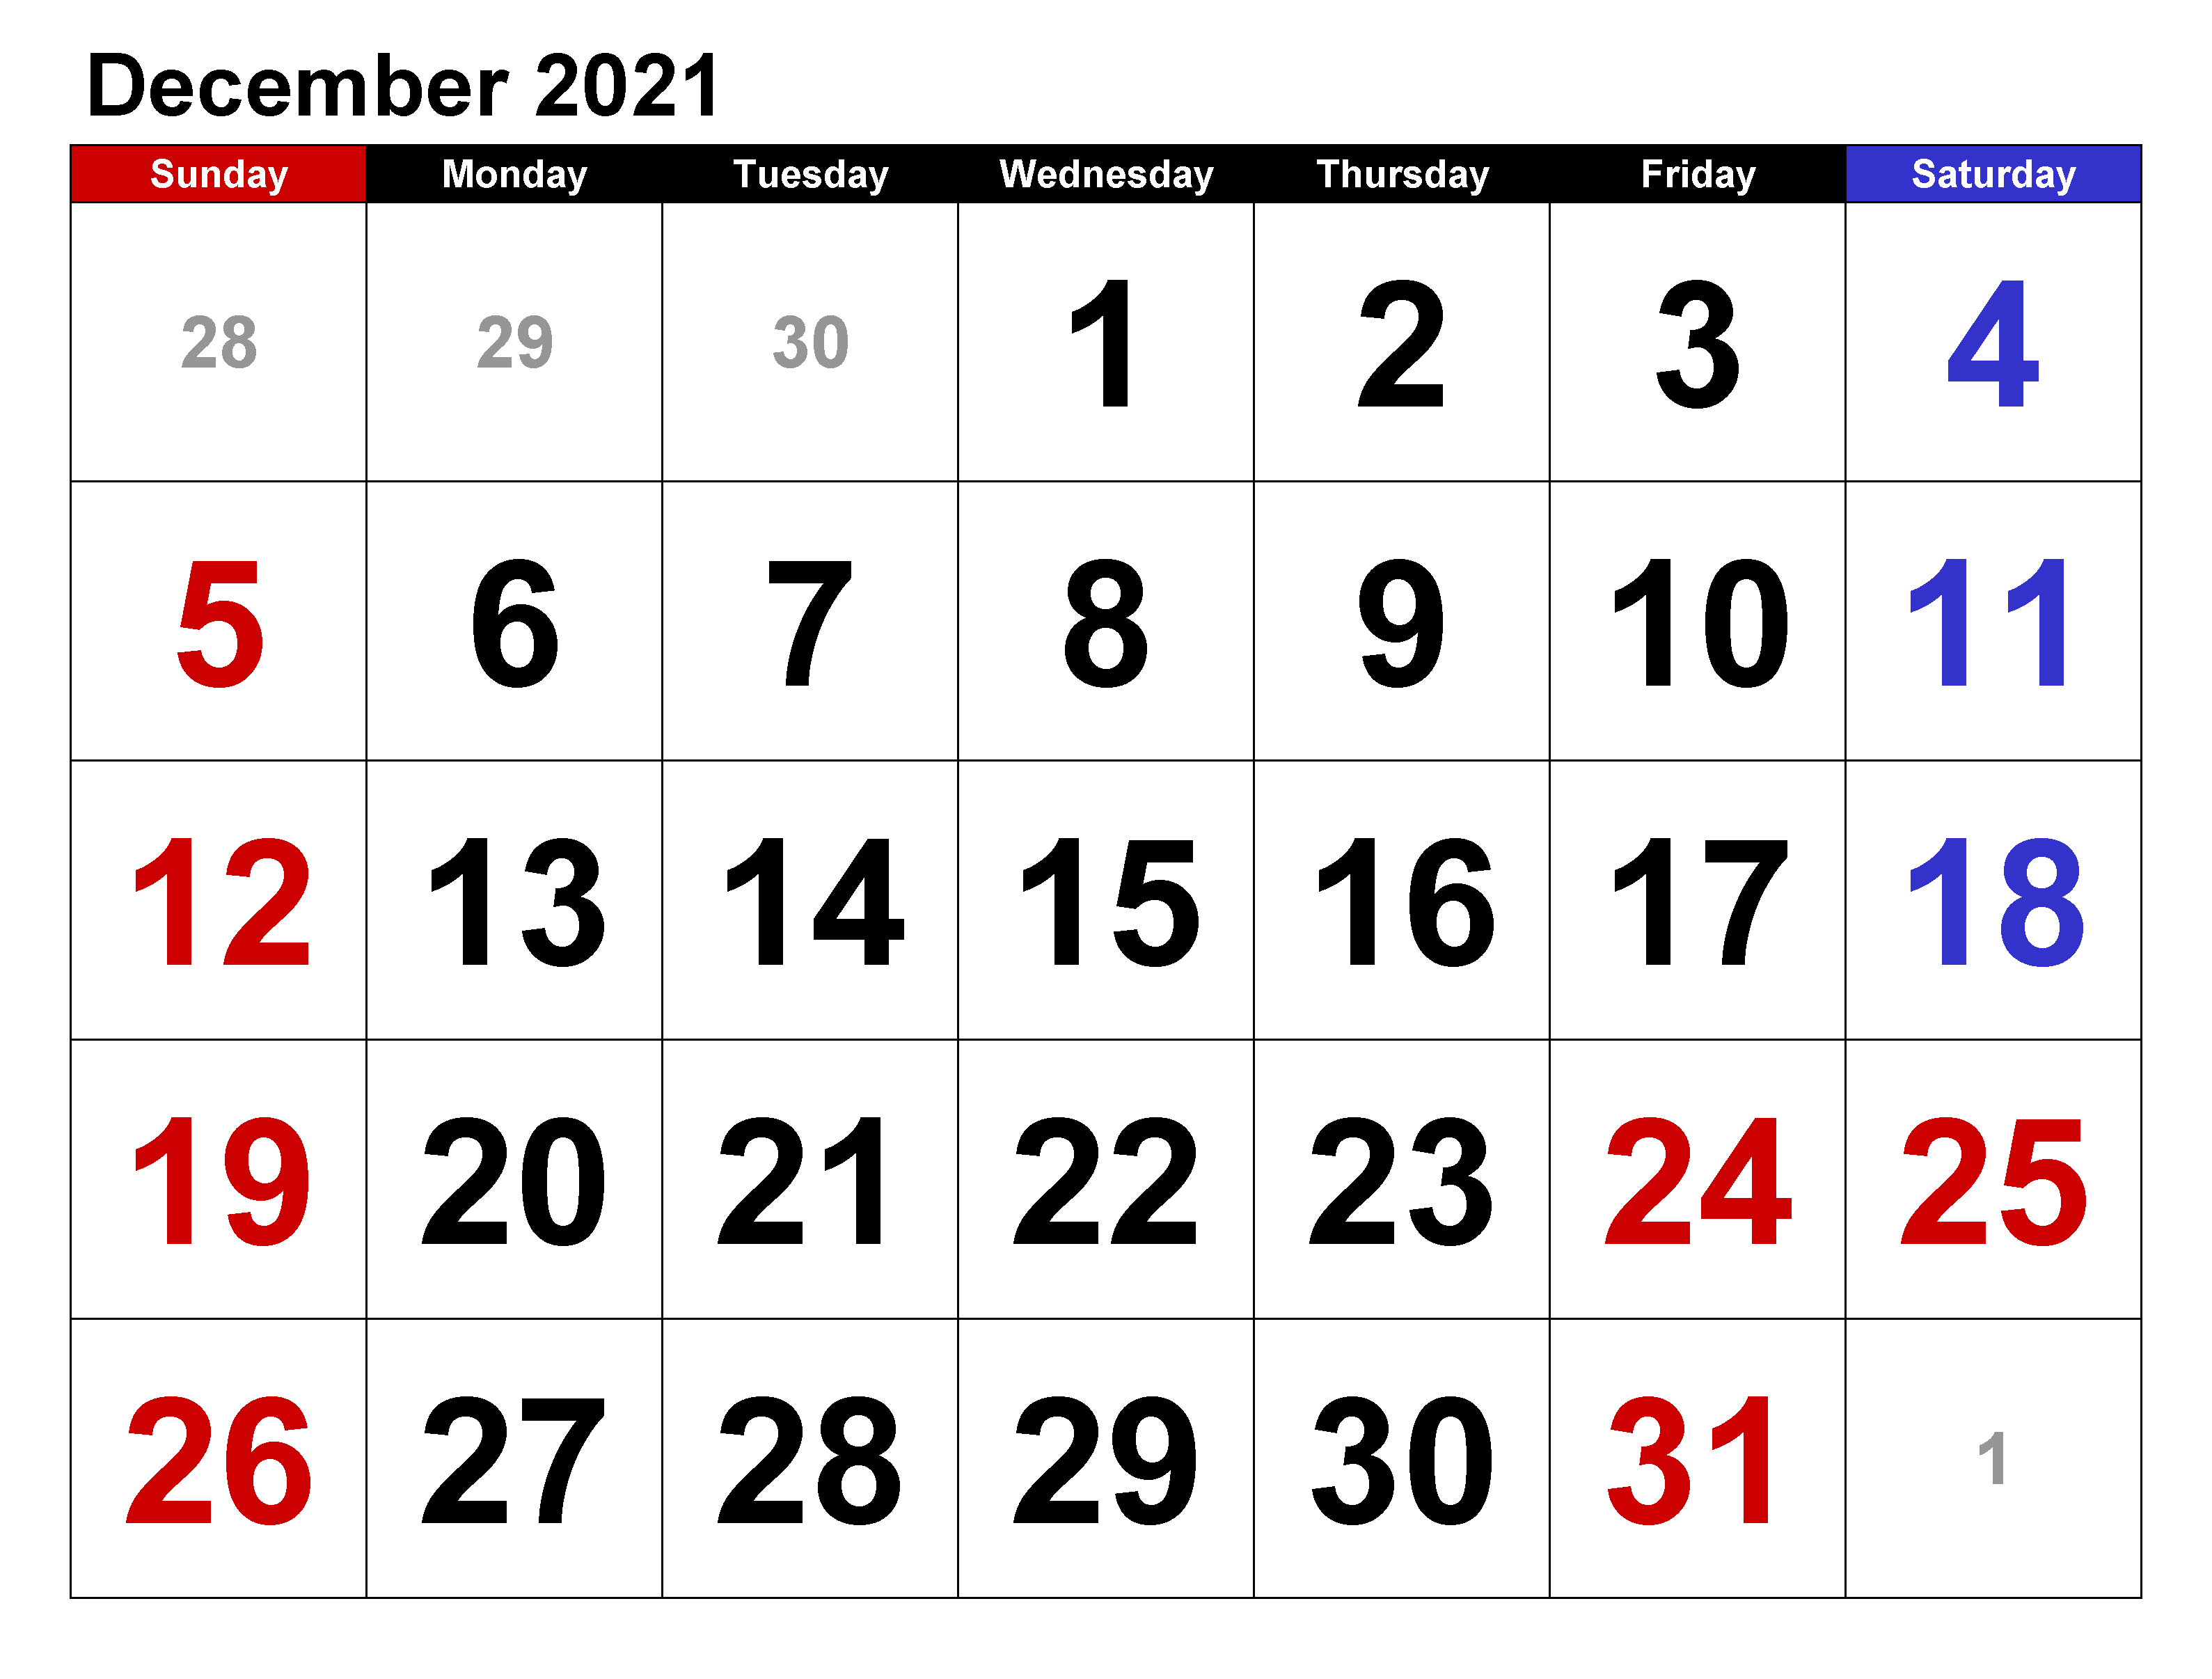 December 2021 Calendar Template for Google Sheets